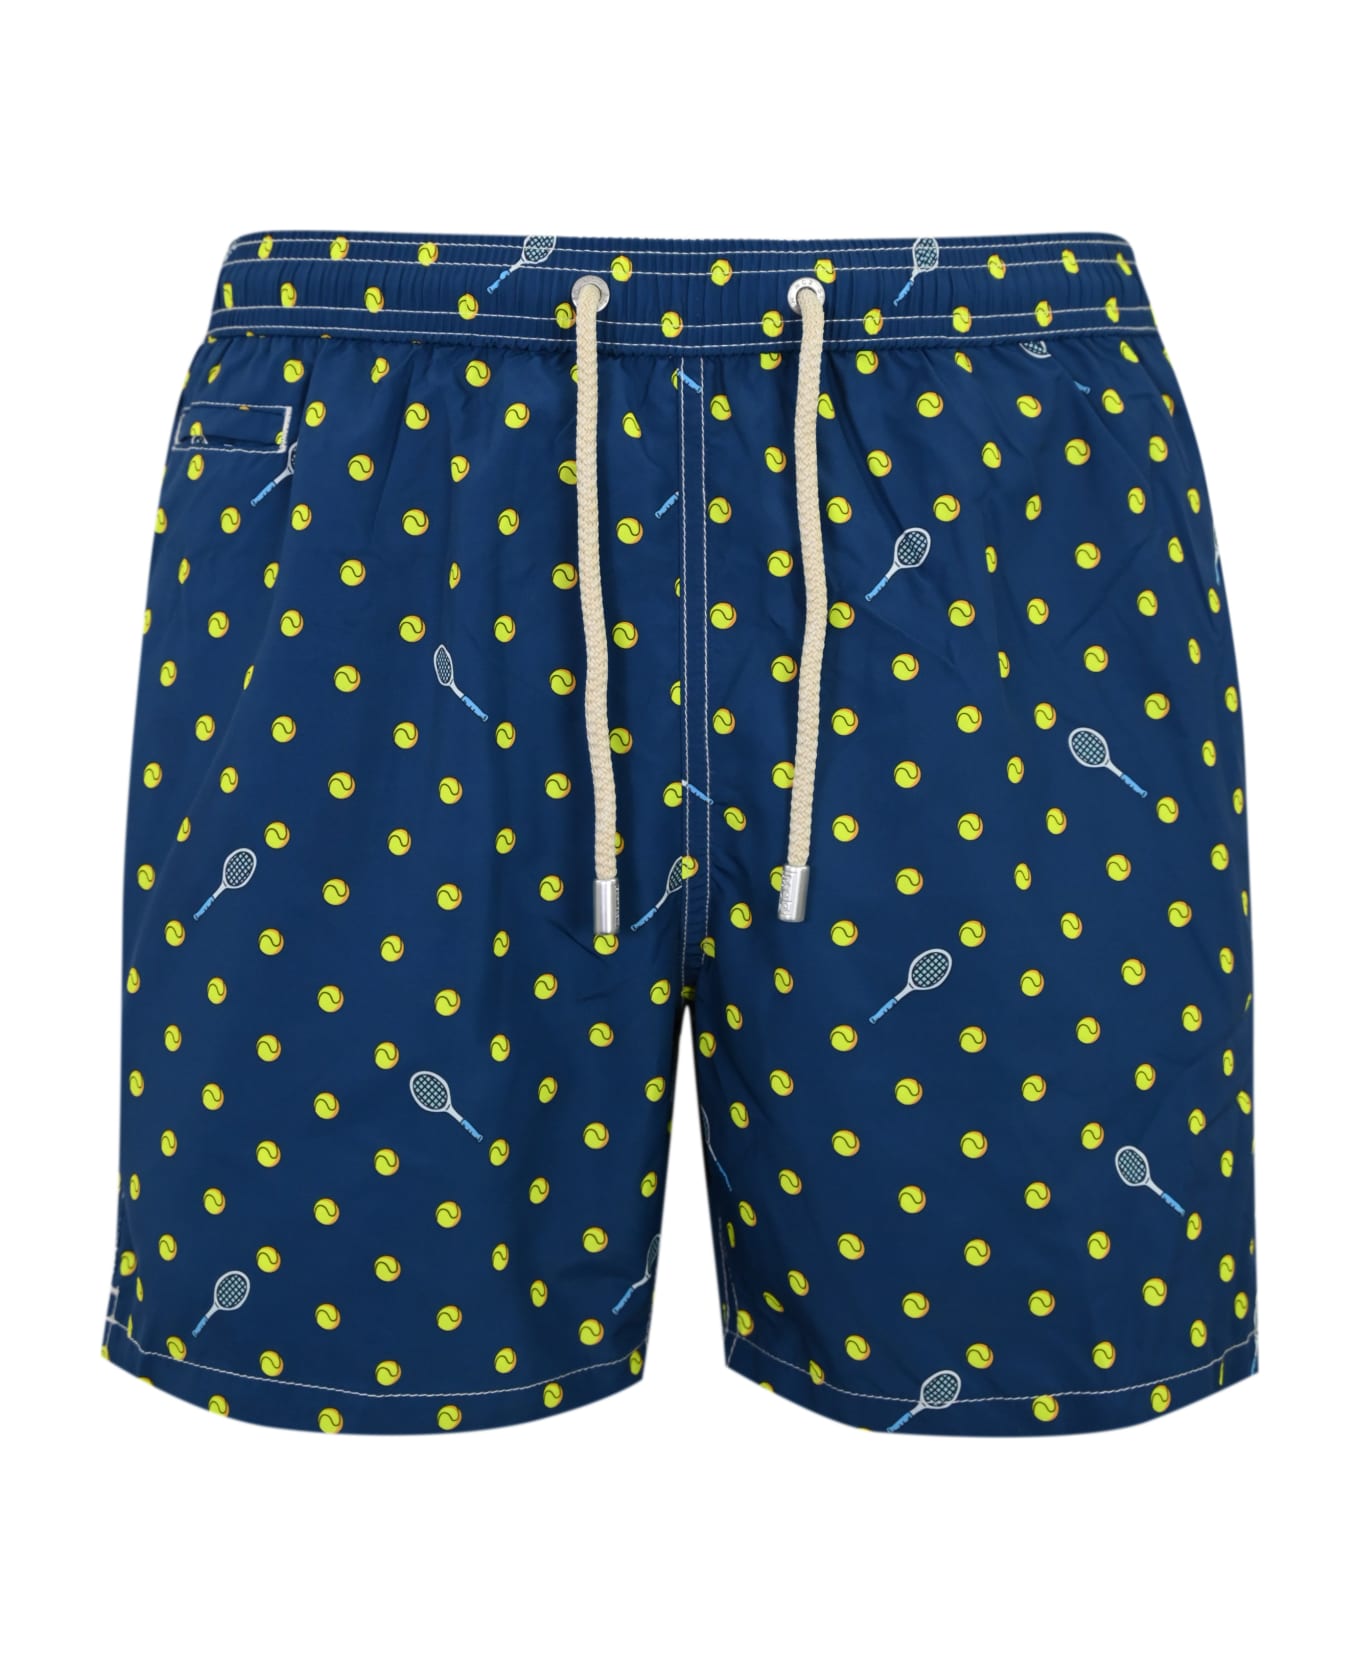 MC2 Saint Barth Lighting Micro Swimsuit With Tennis Print - Blu 水着